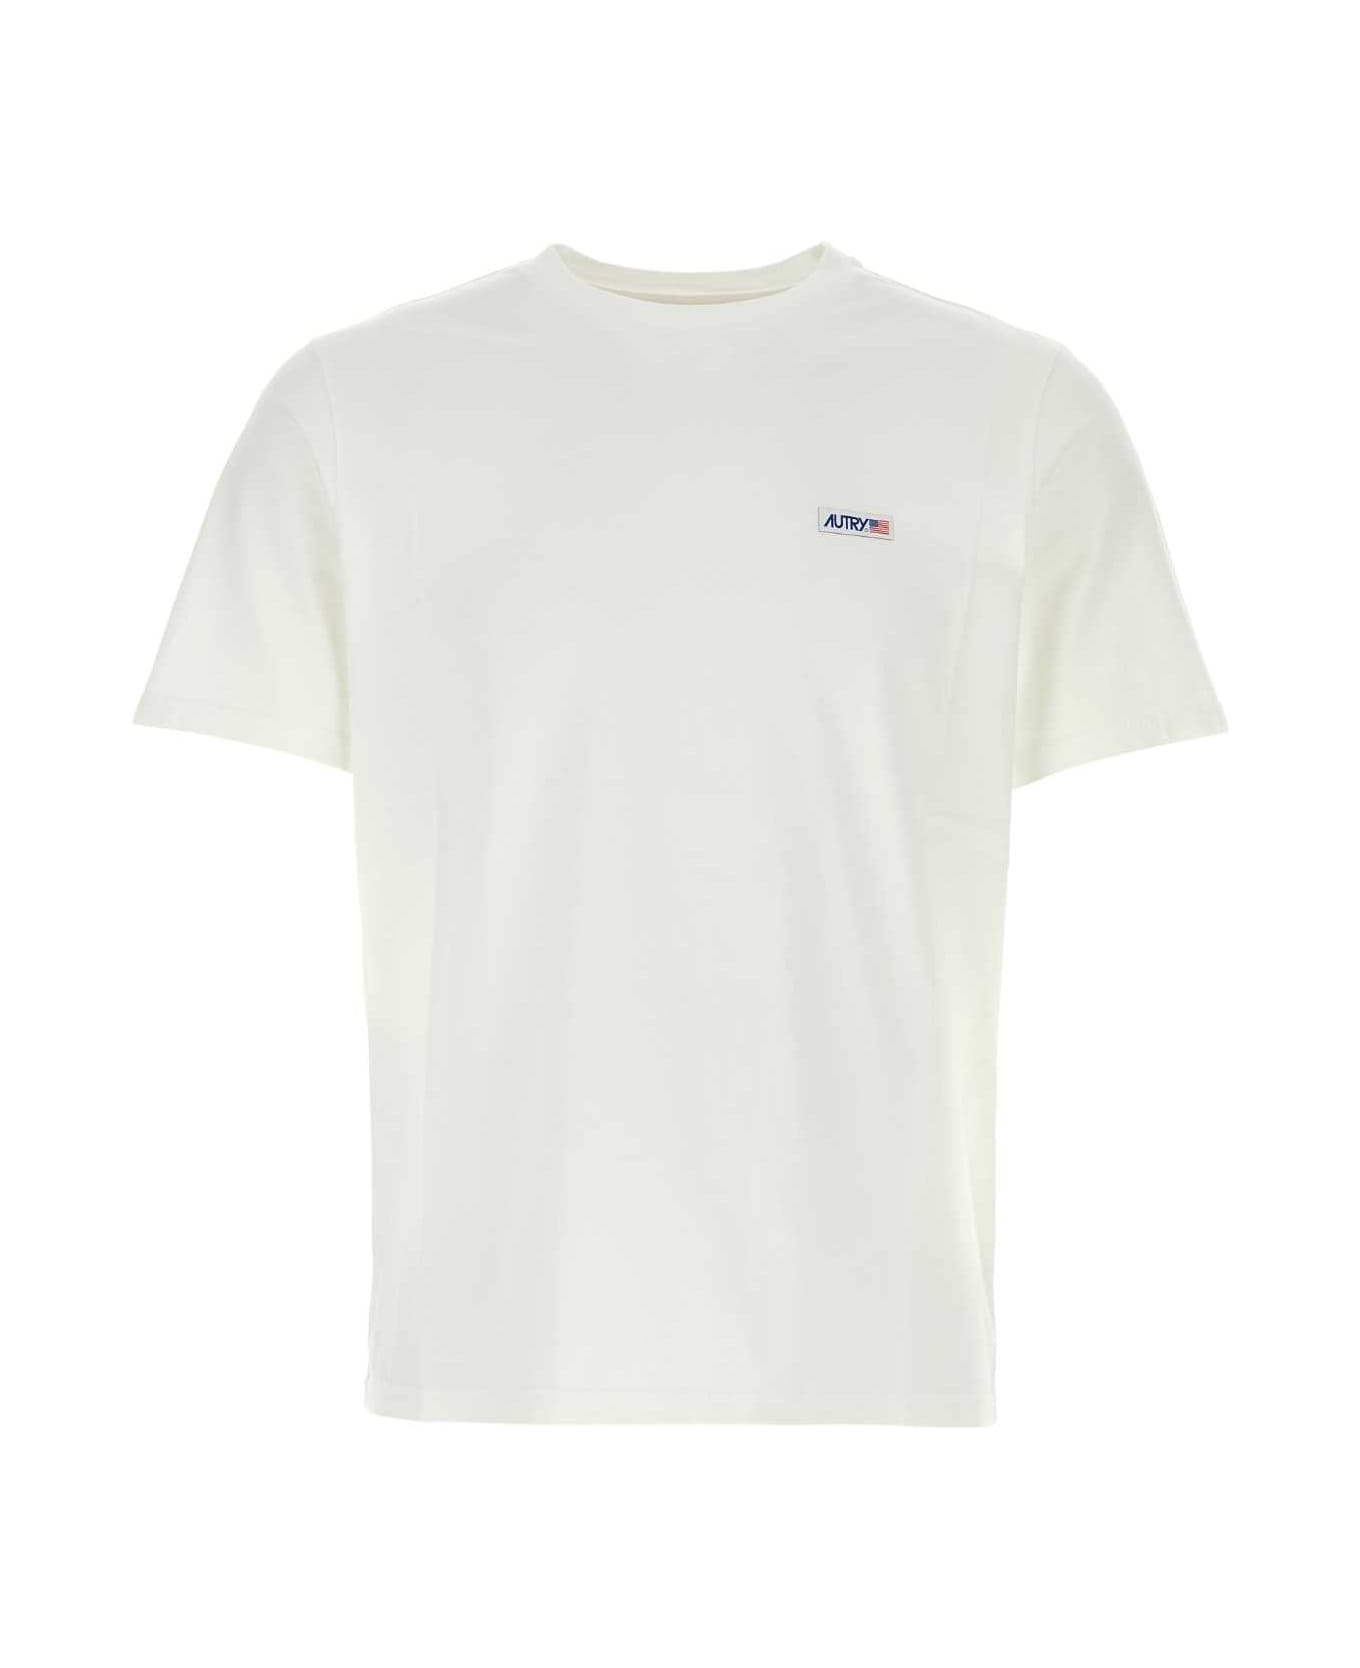 Autry White Cotton T-shirt - 502W